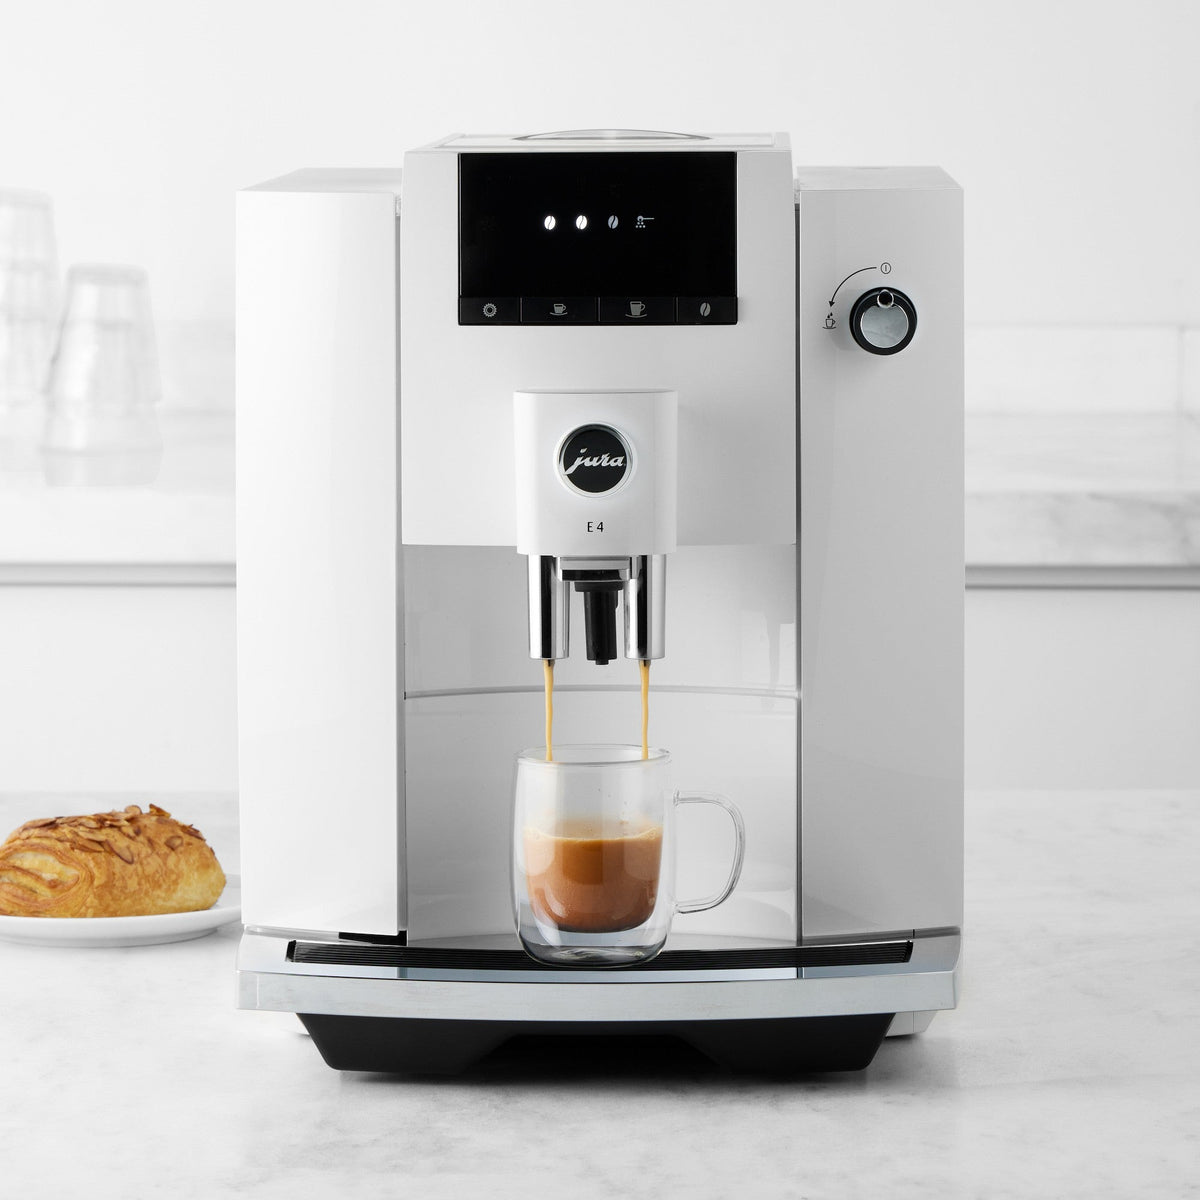 – Tarzianwestforhousewares E4 JURA Espresso Machine Fully Automatic